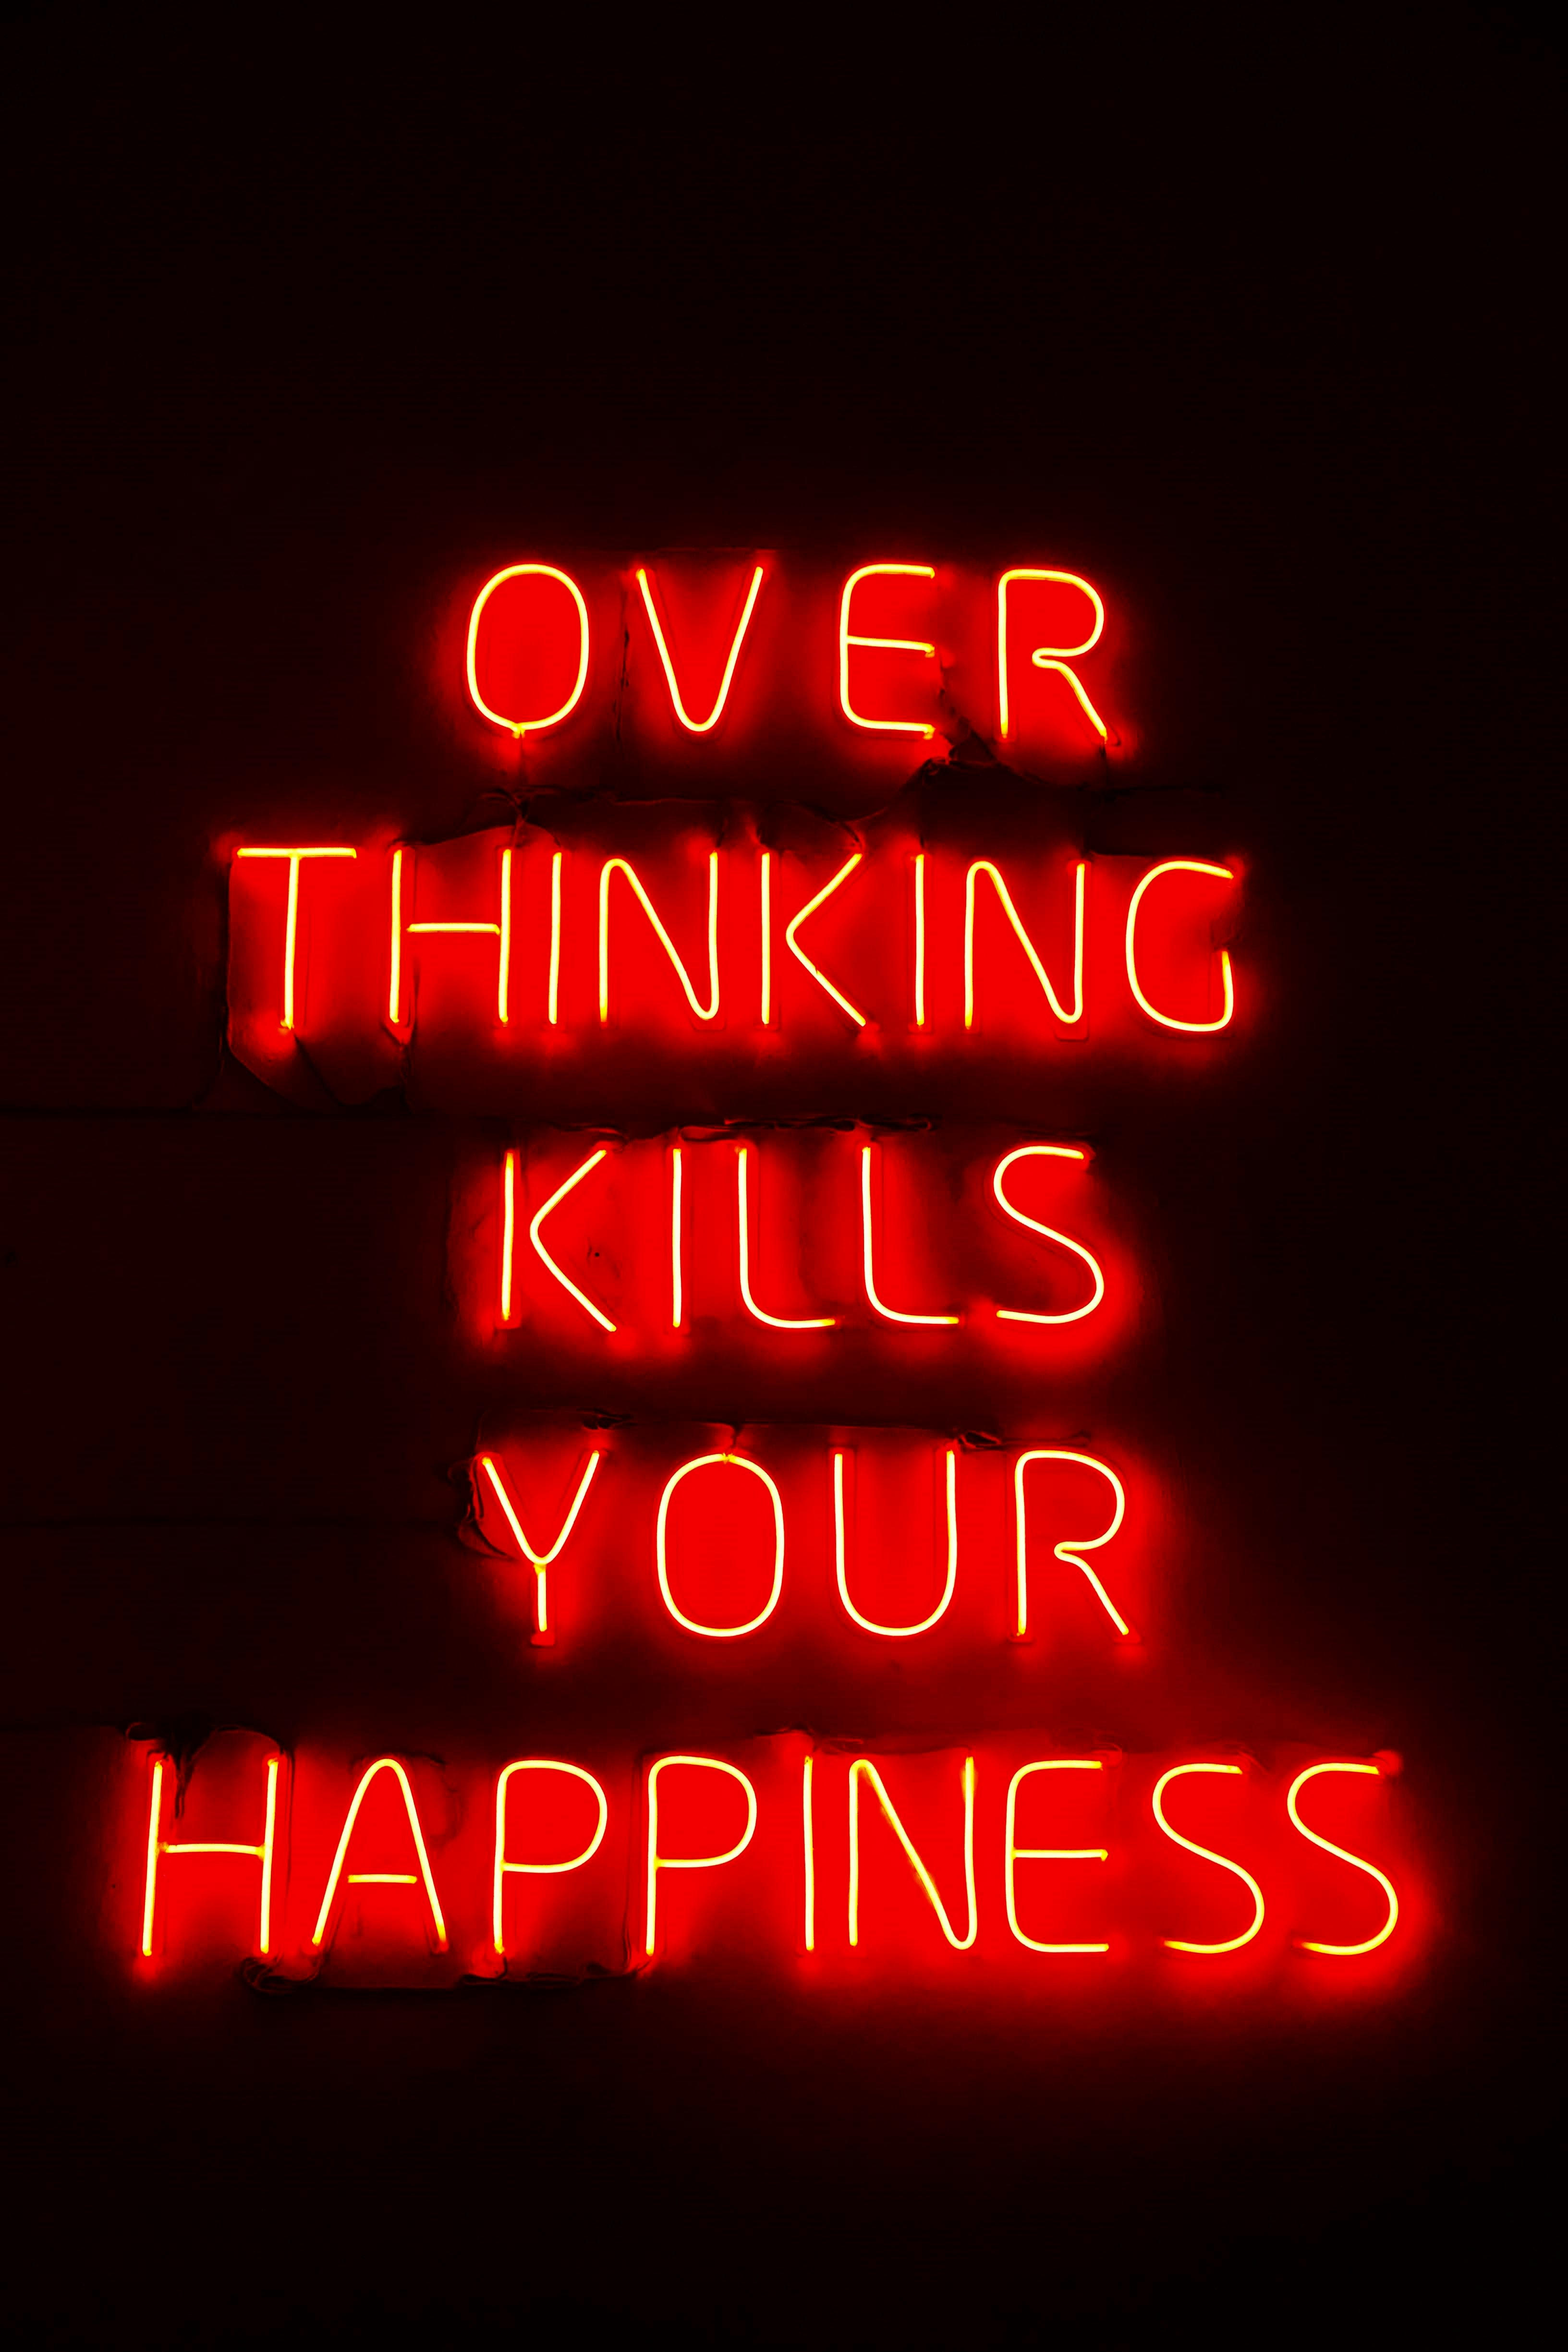 Overthinking kills your happiness.jpg